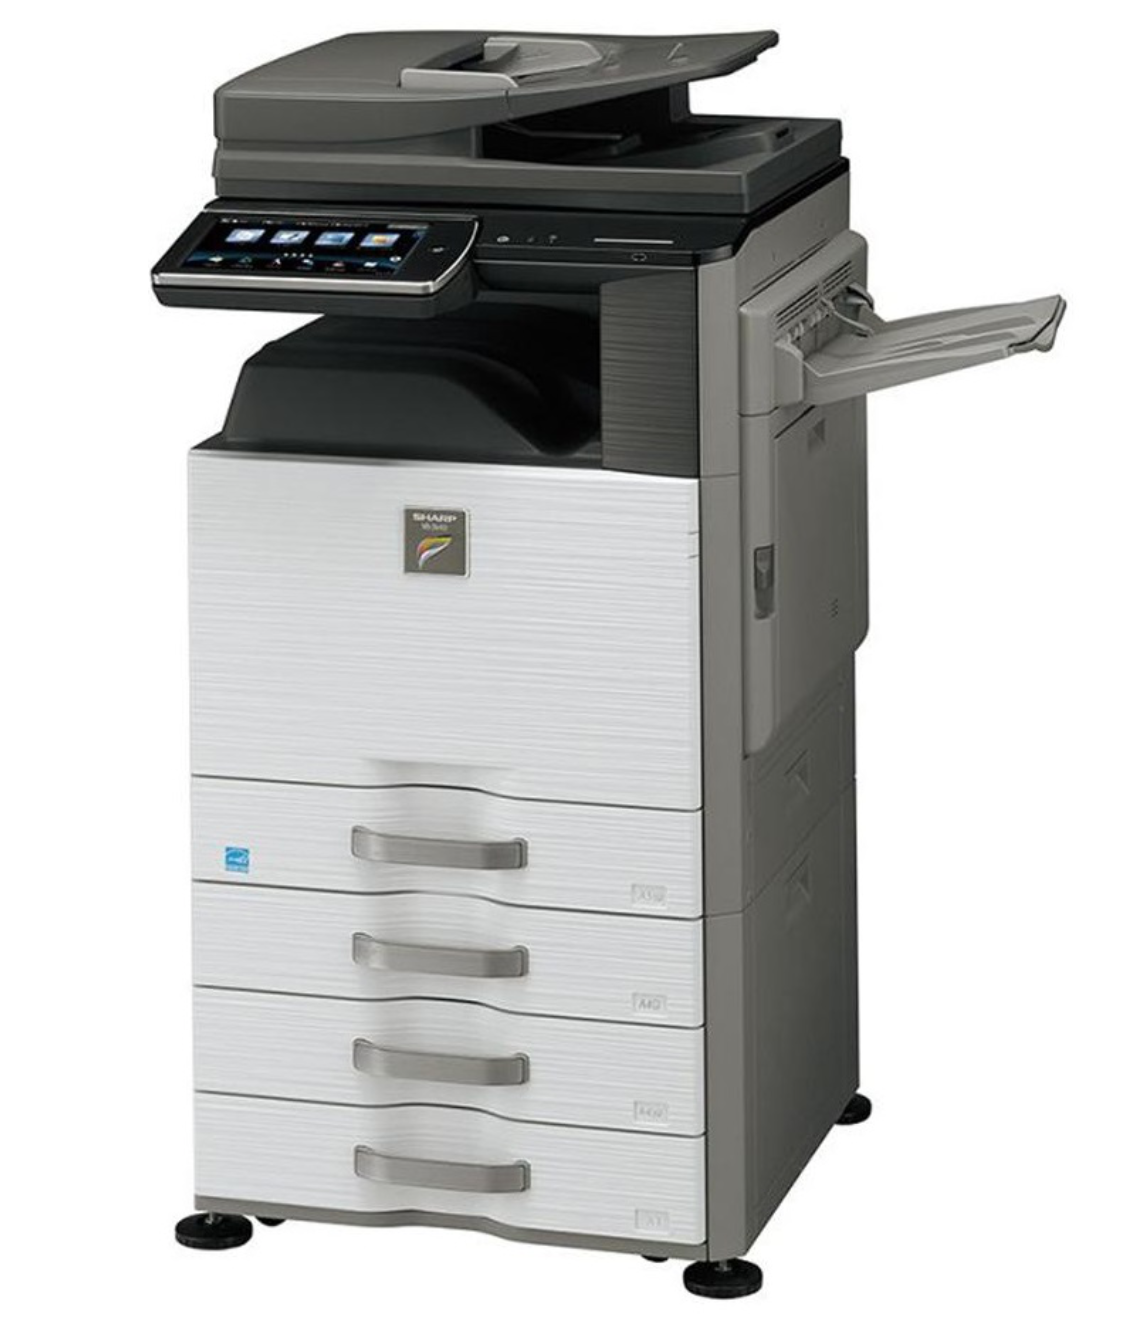 sharp printers mx-5141n